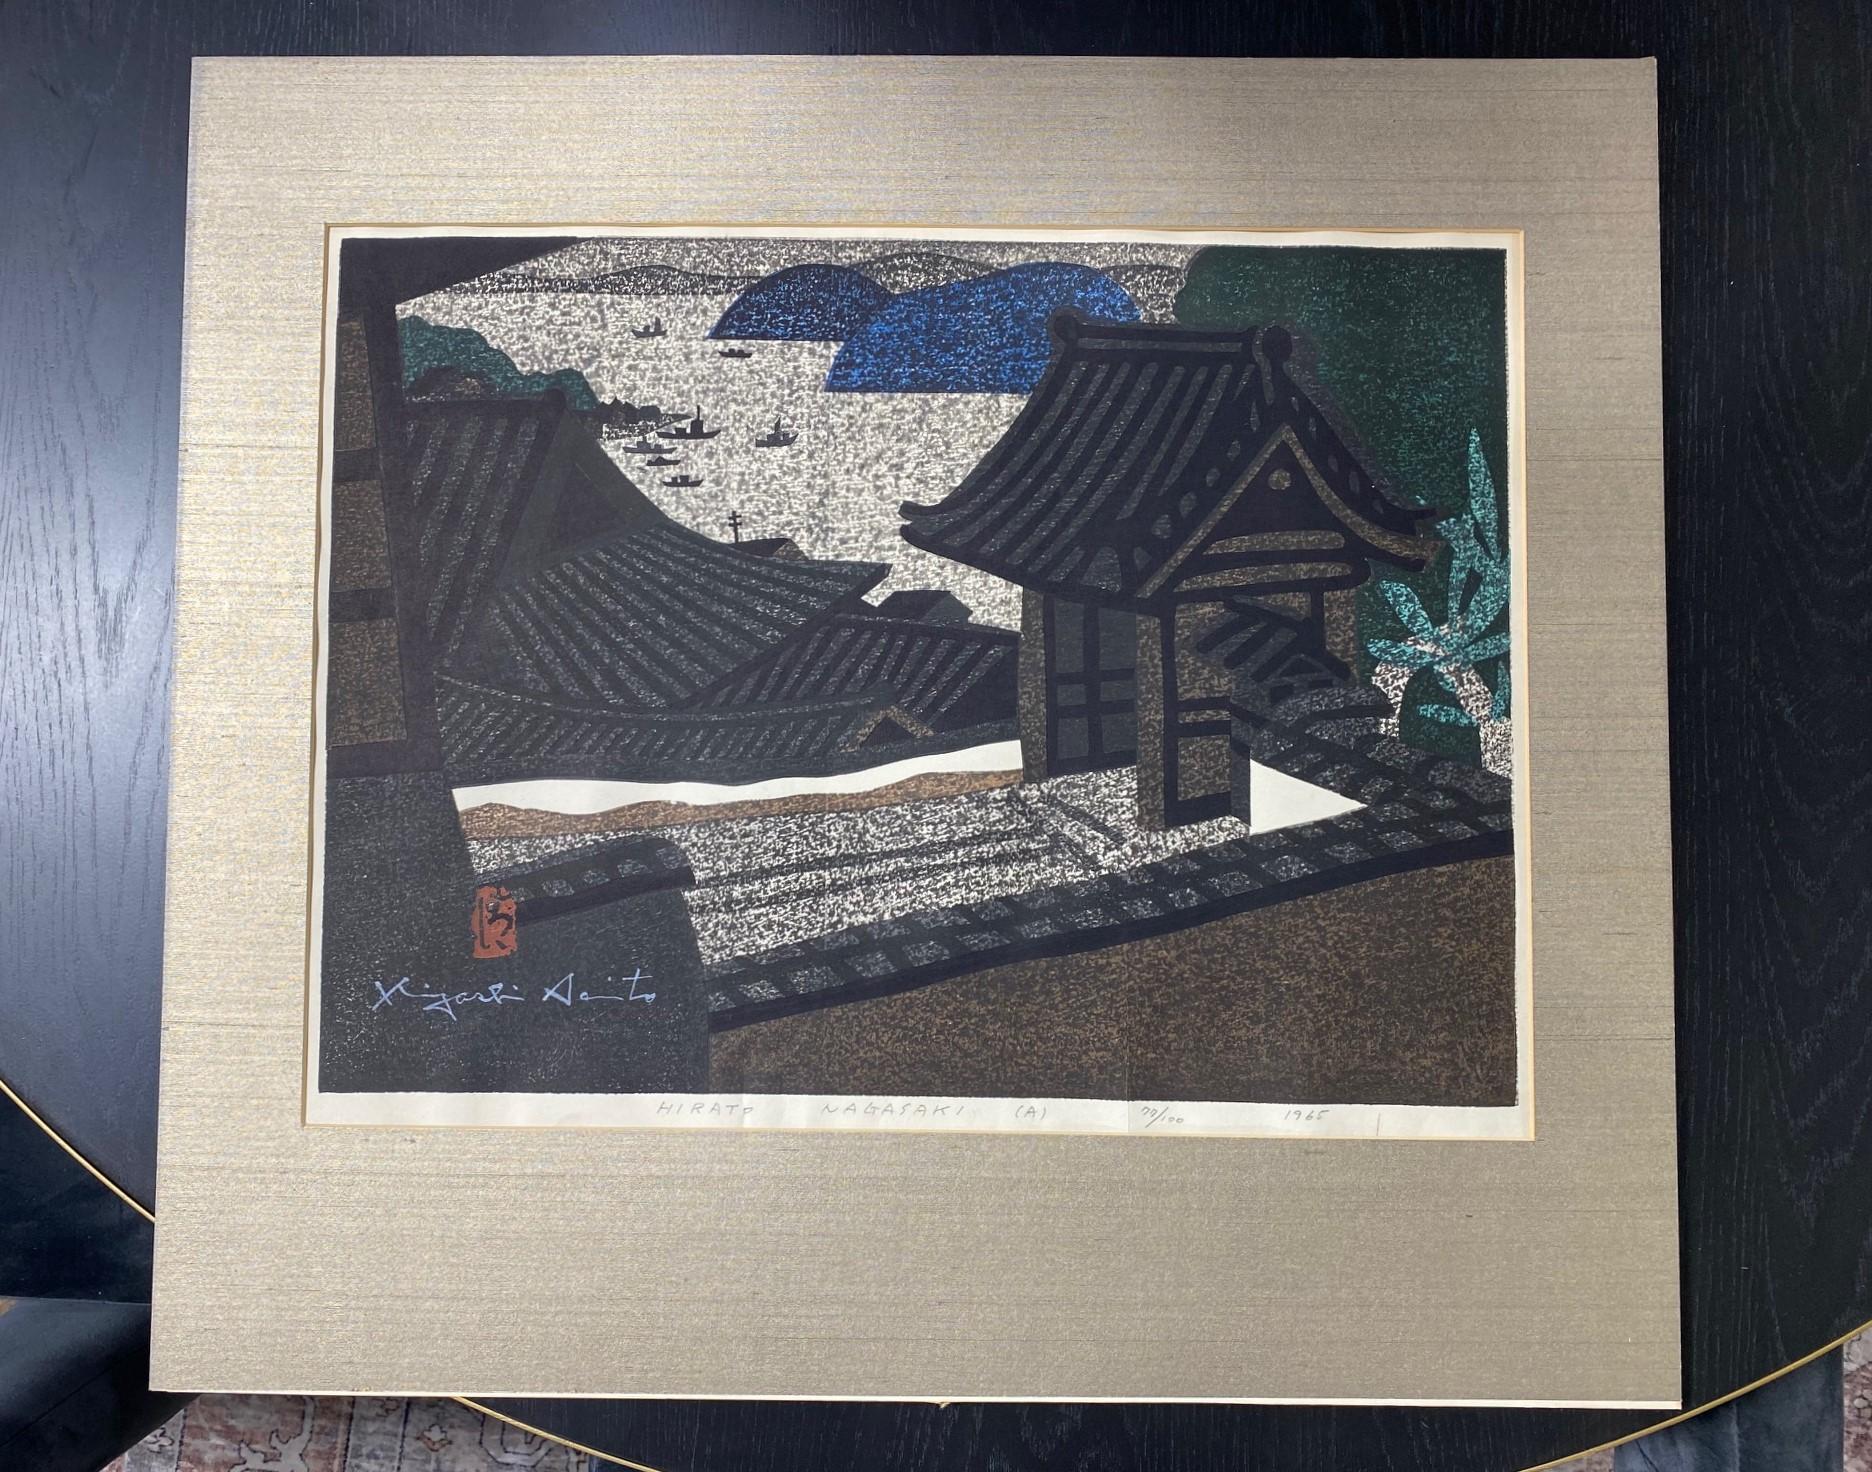 A beautifully composed woodblock print by famed Japanese Sosaku Hanga printmaker Kiyoshi Saito. Many consider Saito to be one of the most important, if not the most important, contemporary Japanese printmakers of the 20th century. This print, which